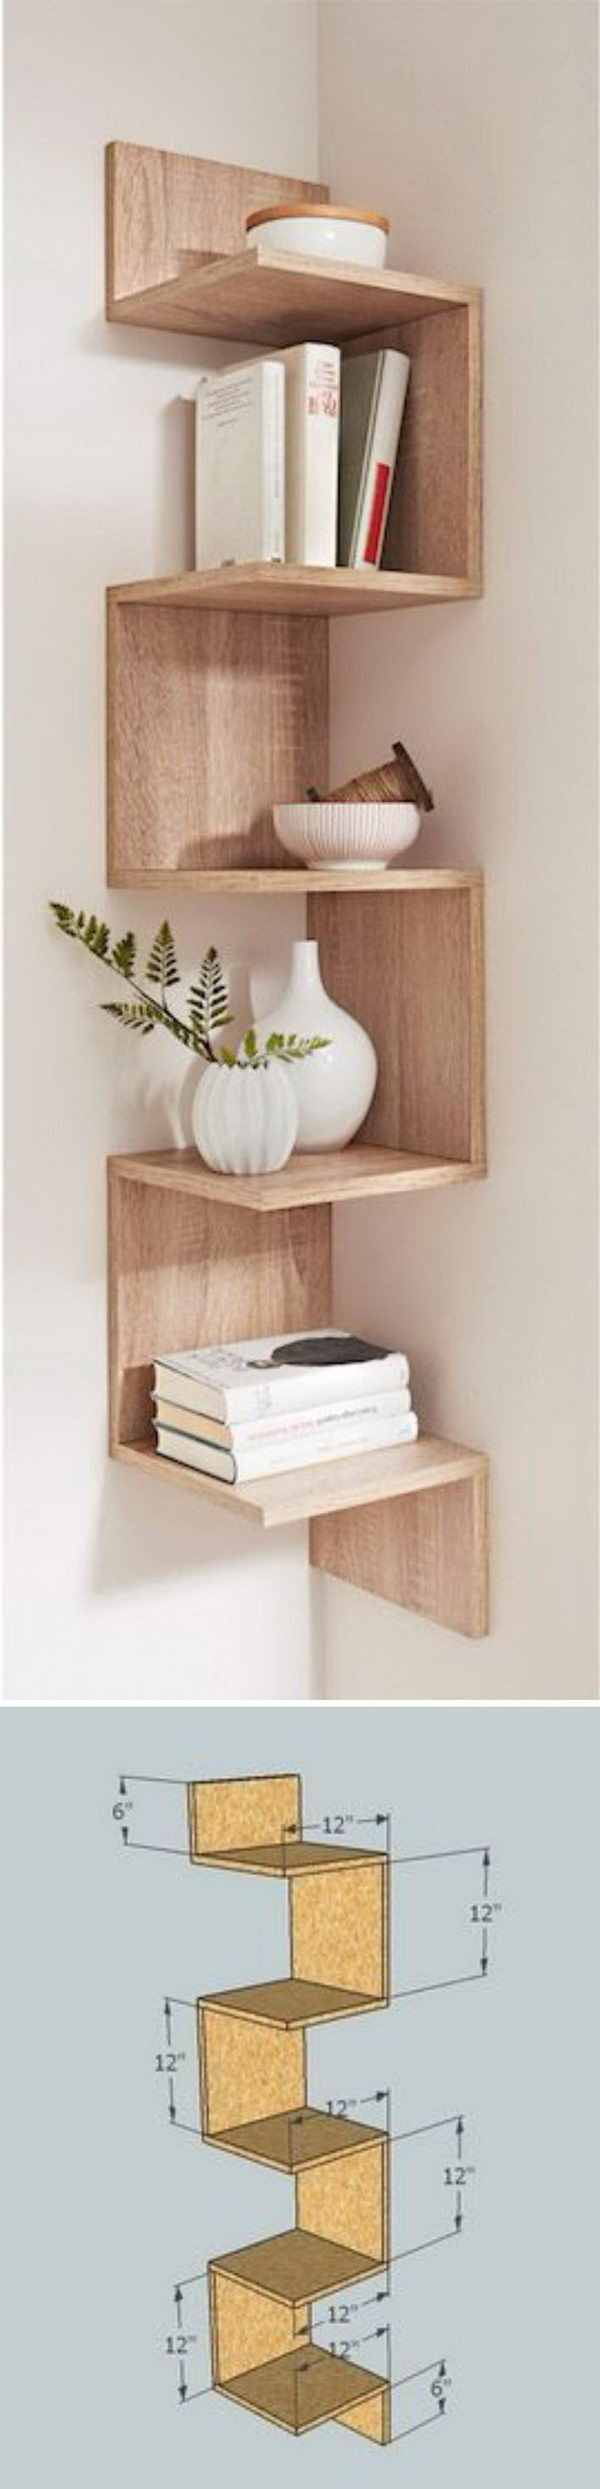 DIY Corner Shelf Plans
 20 DIY Corner Shelves to Beautify Your Awkward Corner 2017